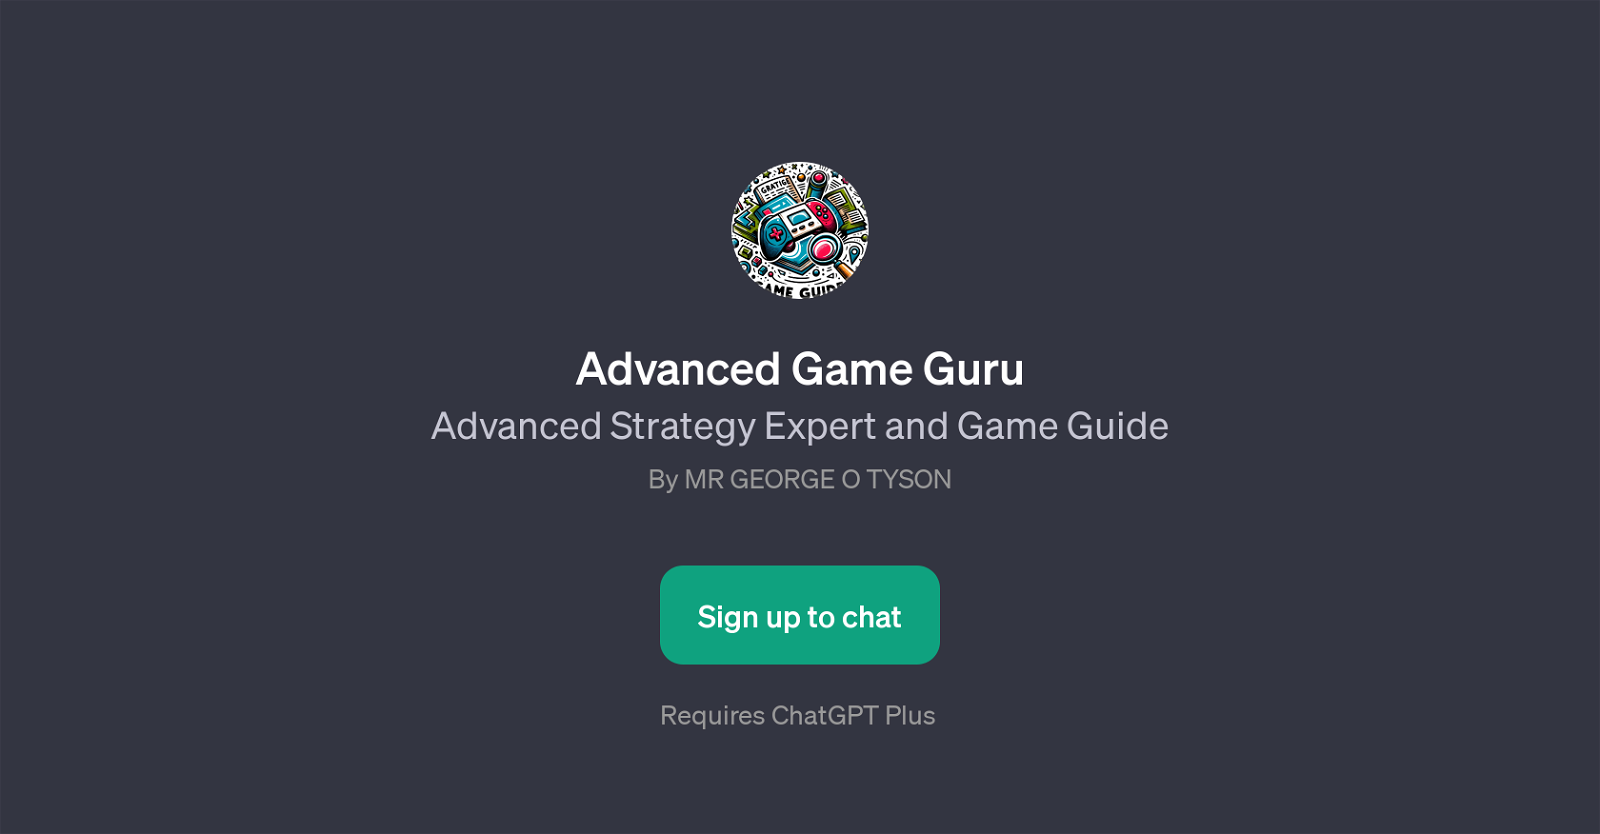 Advanced Game Guru website